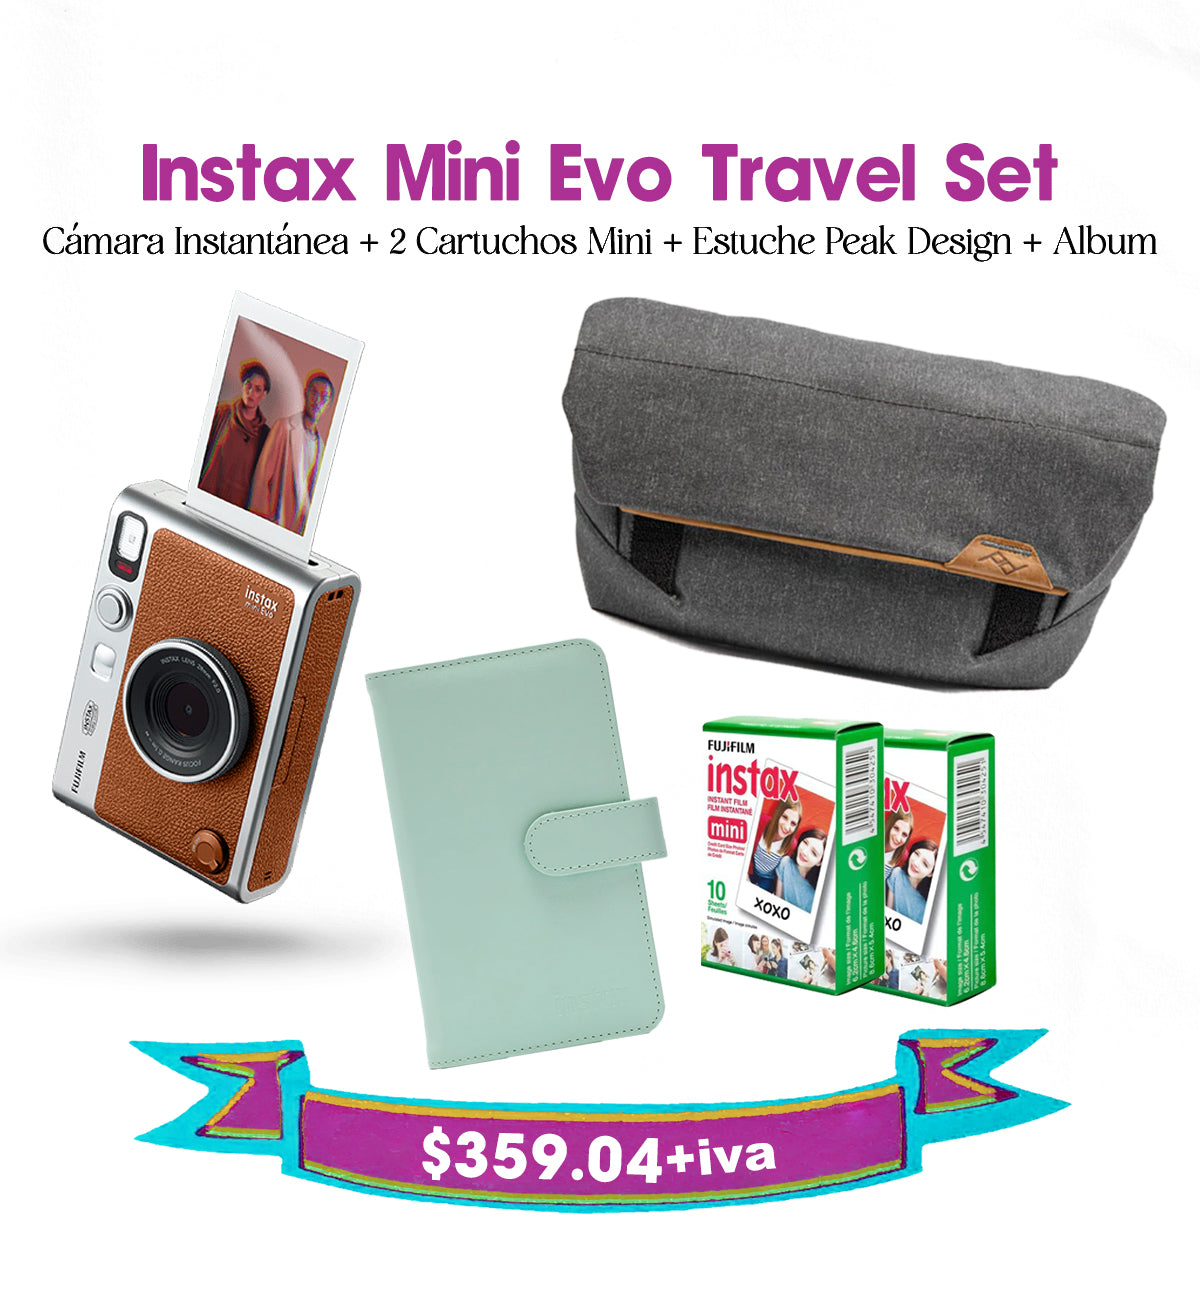 Instax Mini Evo Travel Set